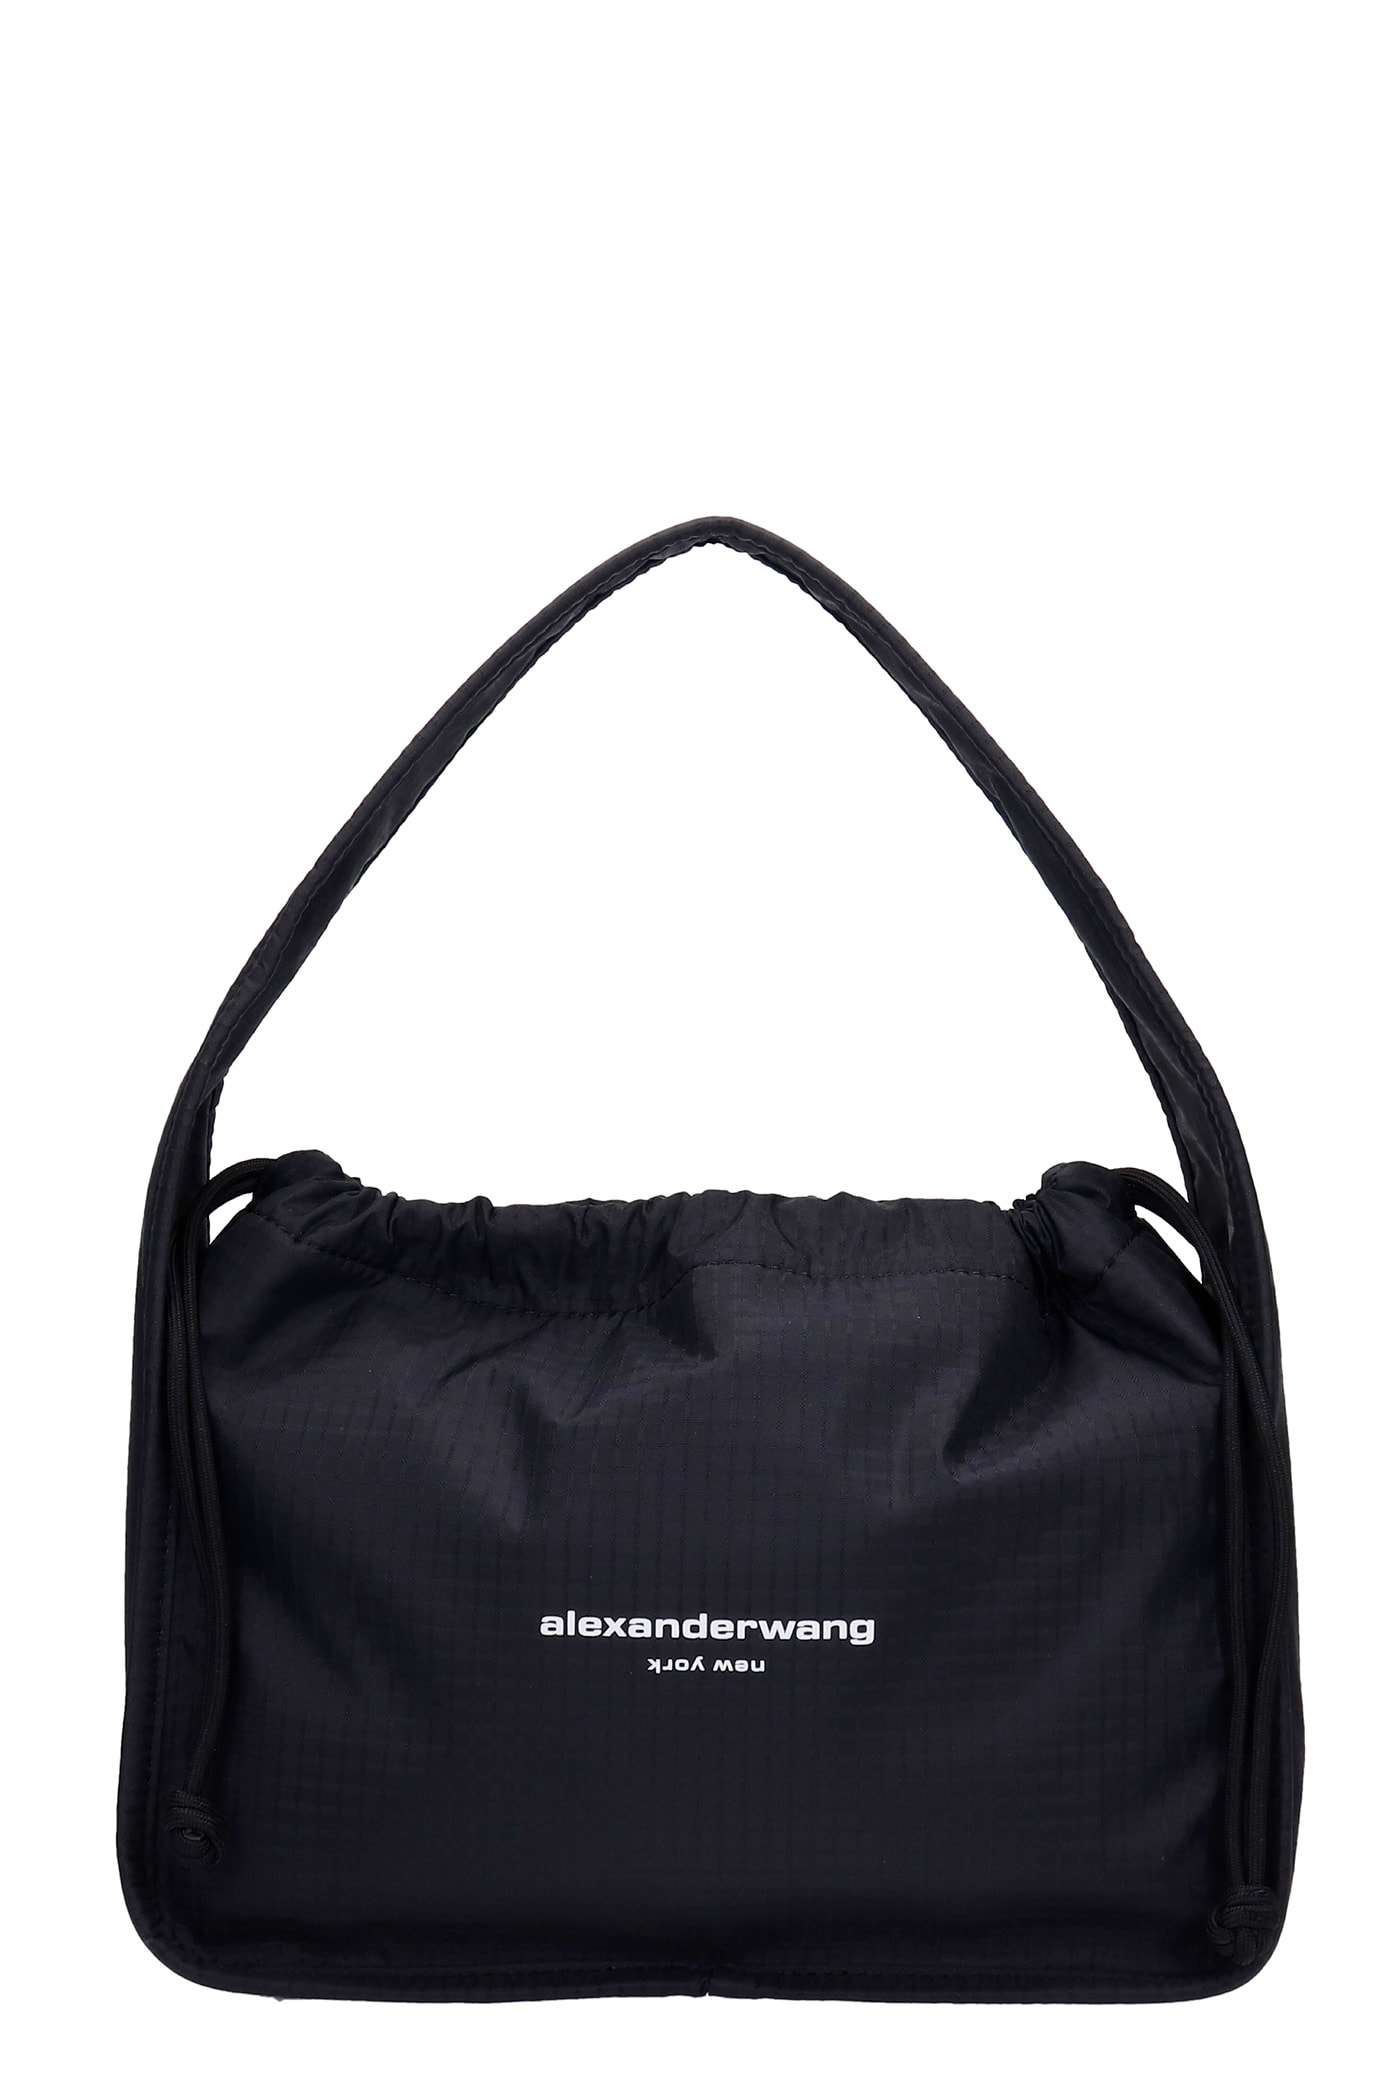 Alexander Wang Ryan Shoulder Bag In Black Nylon